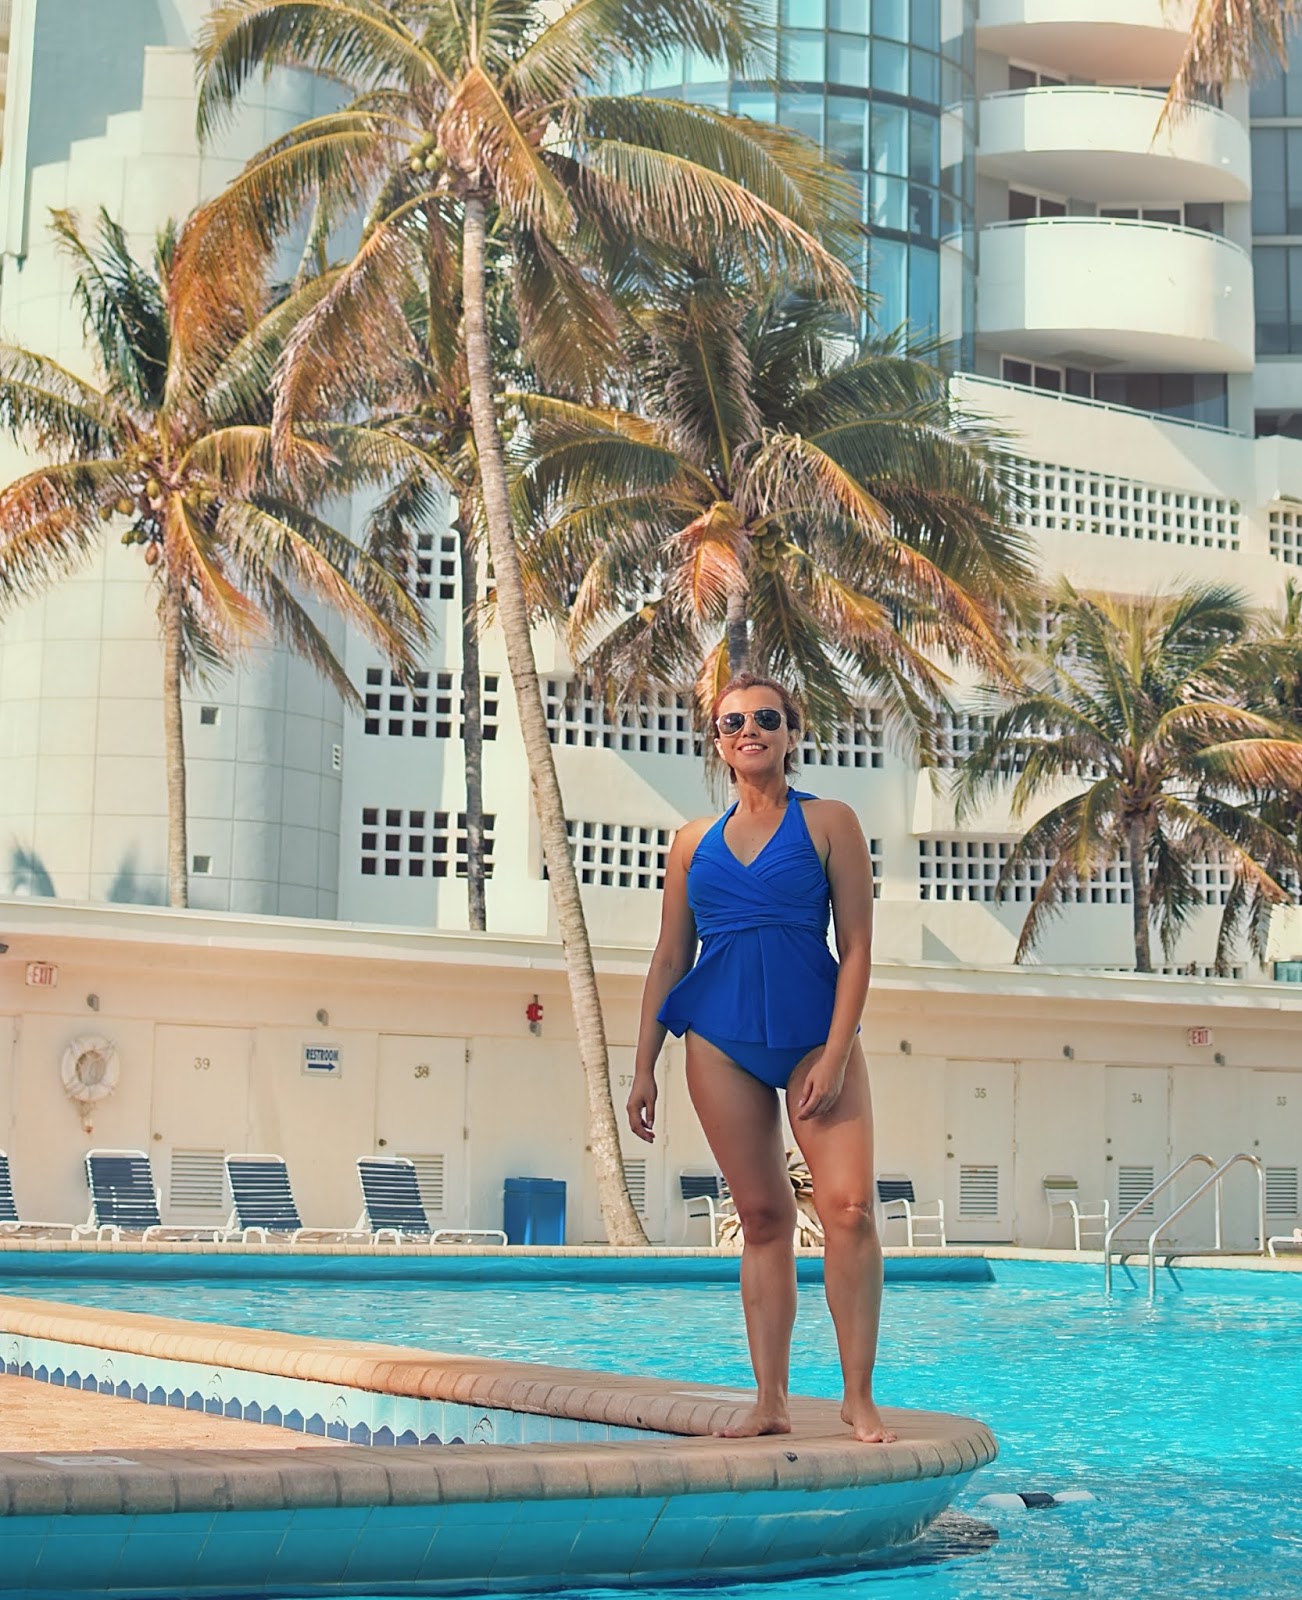 Royal Blue Ruched Swing Halter Tankini Set -dia de piscina en el paraiso-mariestilo-miamibeach-south beach-bikini-fashionblogger-travelblogger-lookbook-armandhugon-dcblogger-modaelsalvador-ootd-